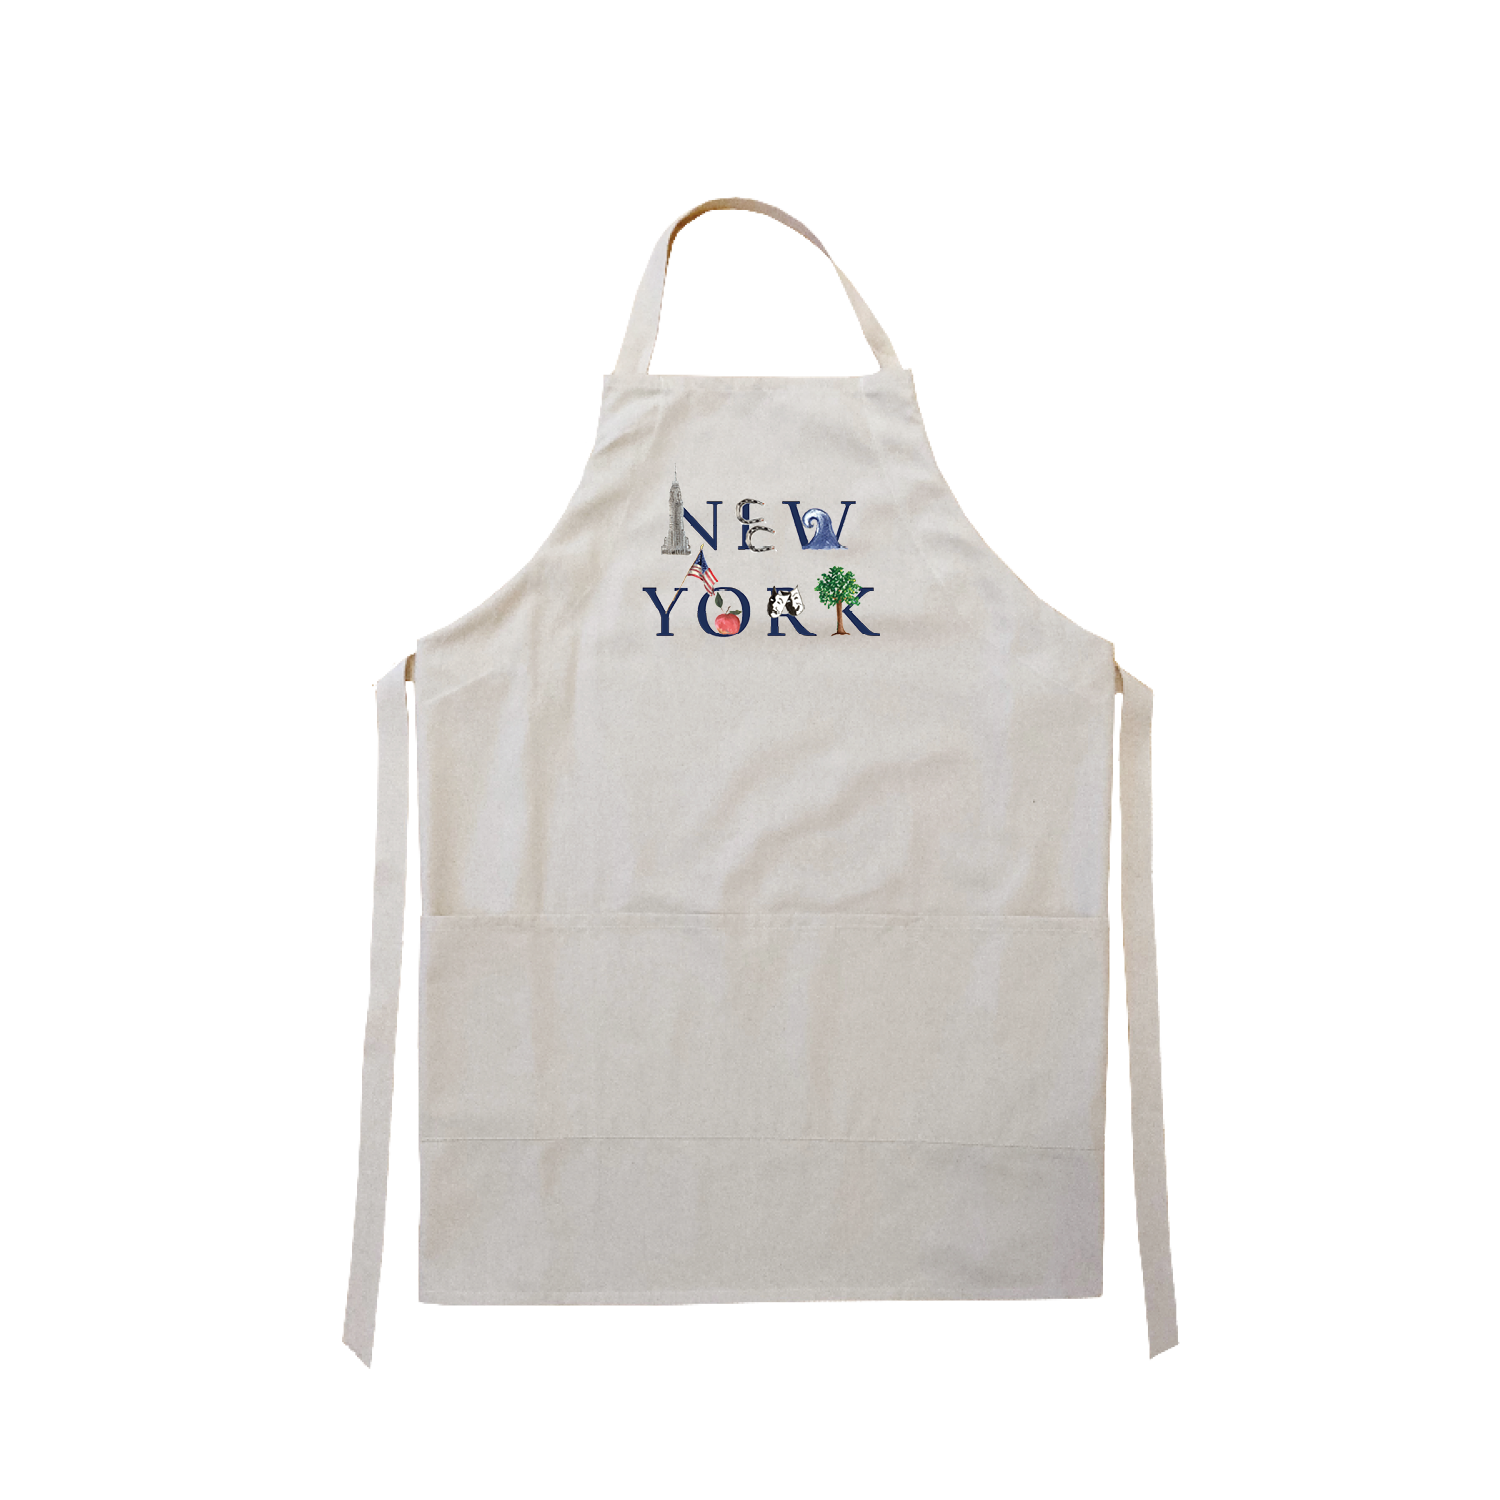 New York apron